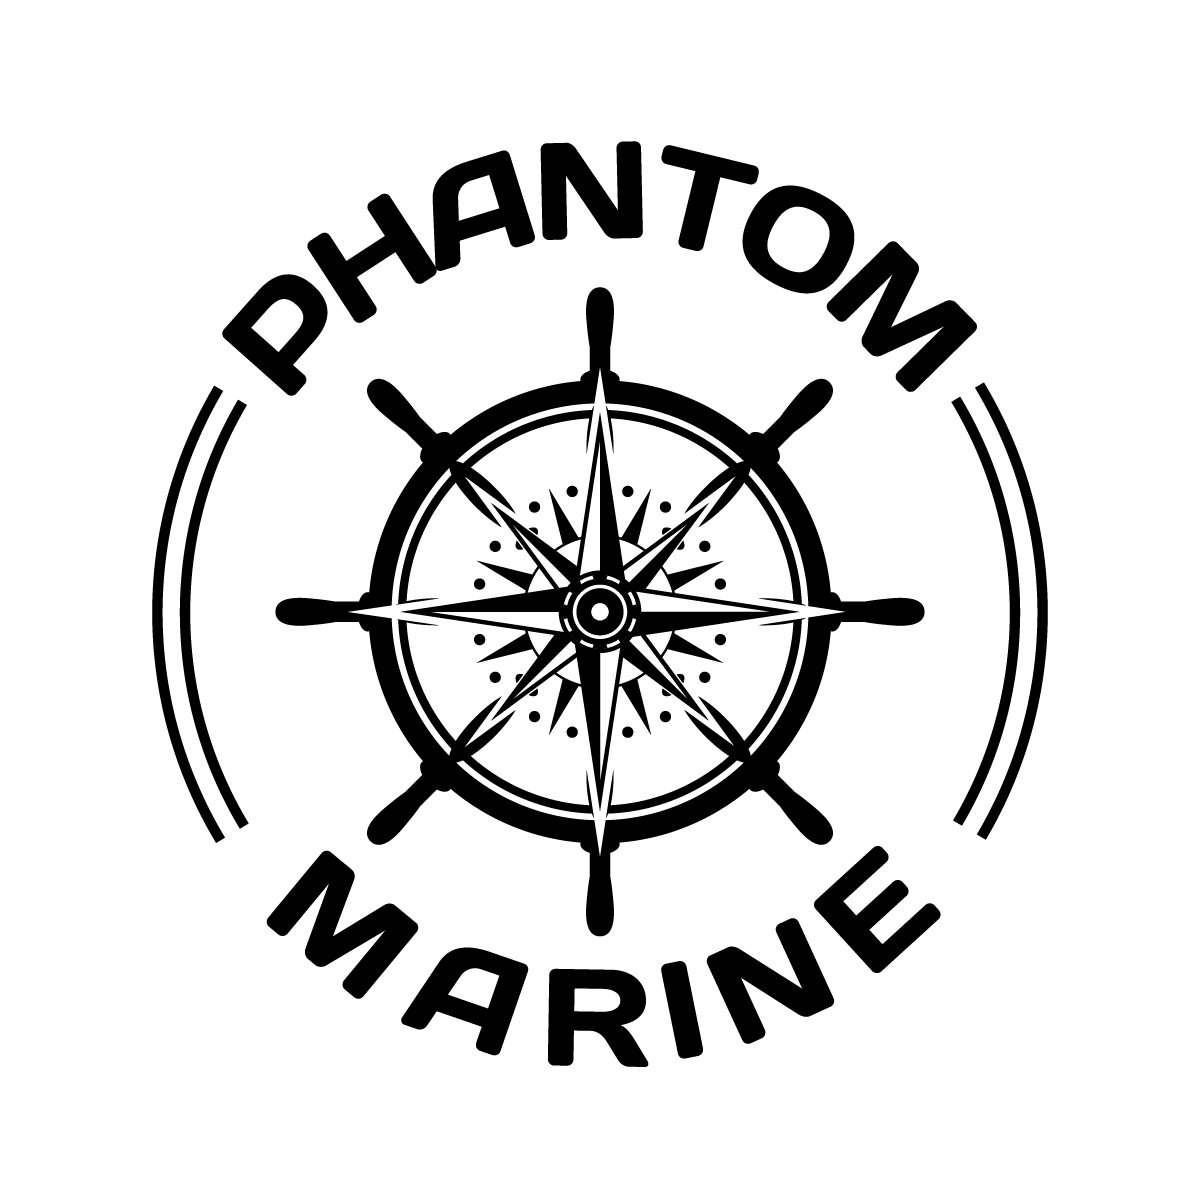 Phantom Marine are the boatbuilders of the Aquafish 18.5', 23',28' and 9m catamaran fishing boats.